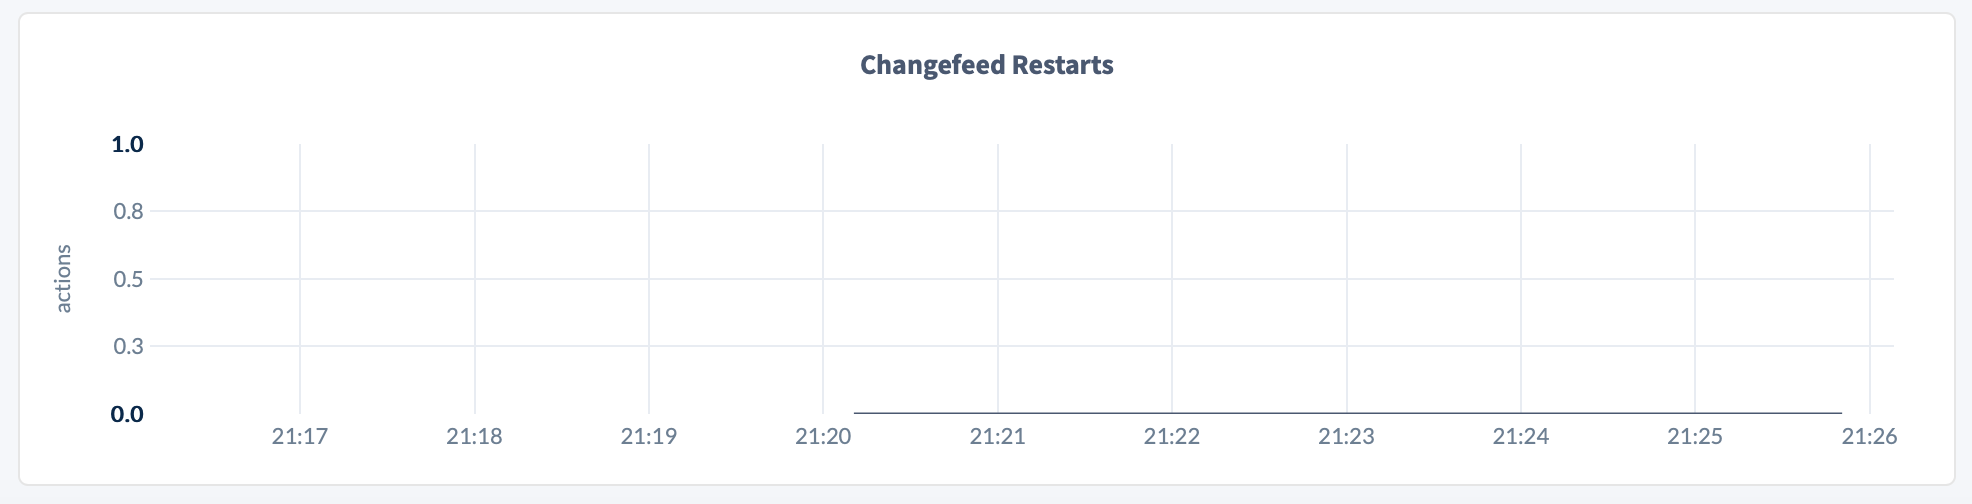 CockroachDB Admin UI Changefeed Restarts graph